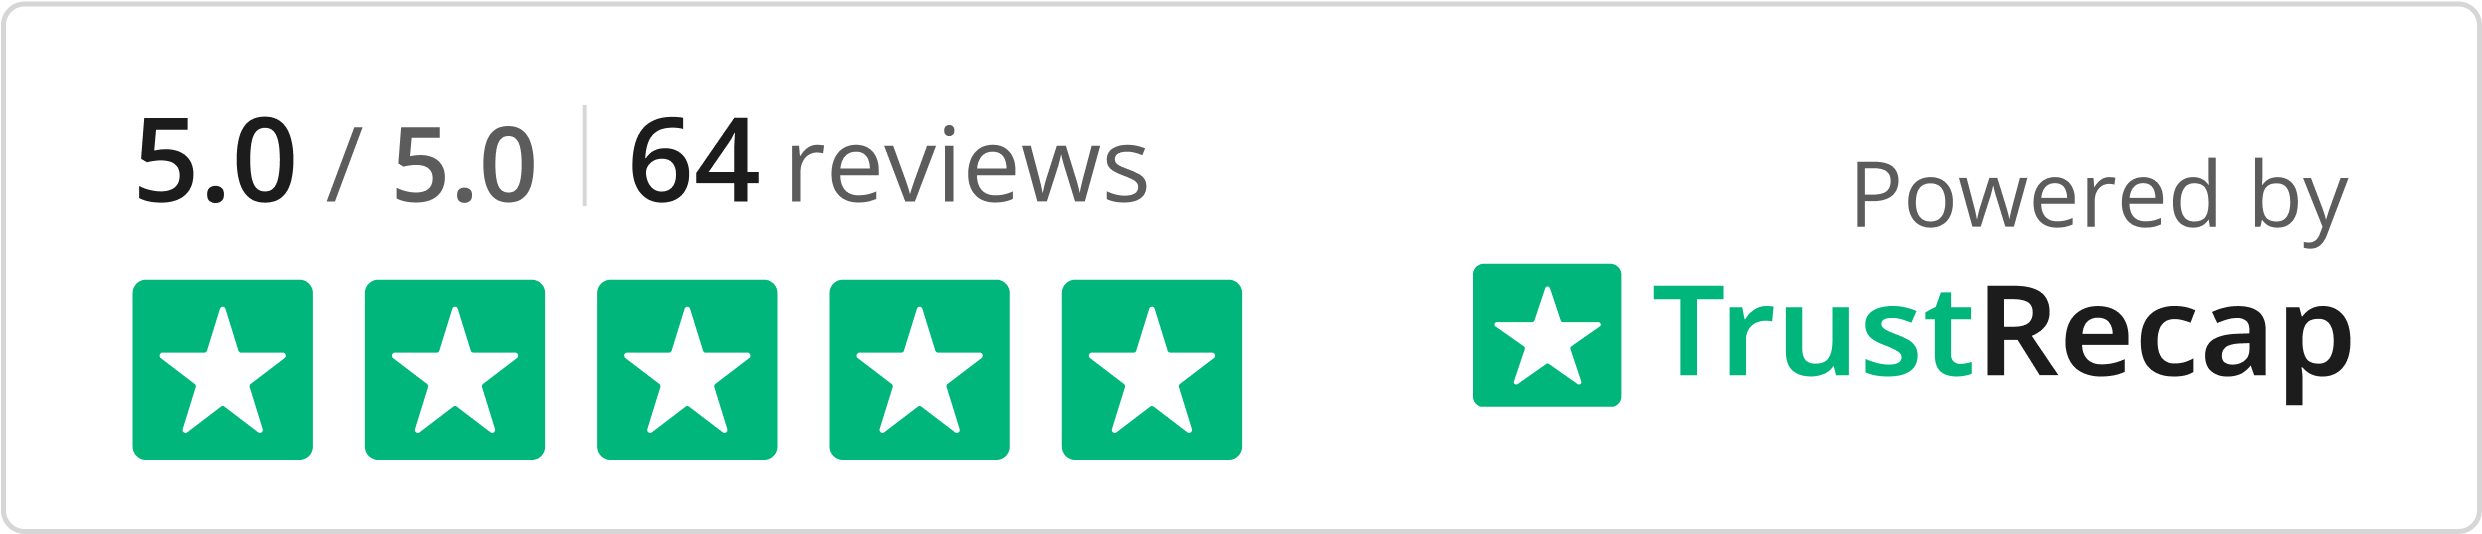 TrustRecap Reviews Header